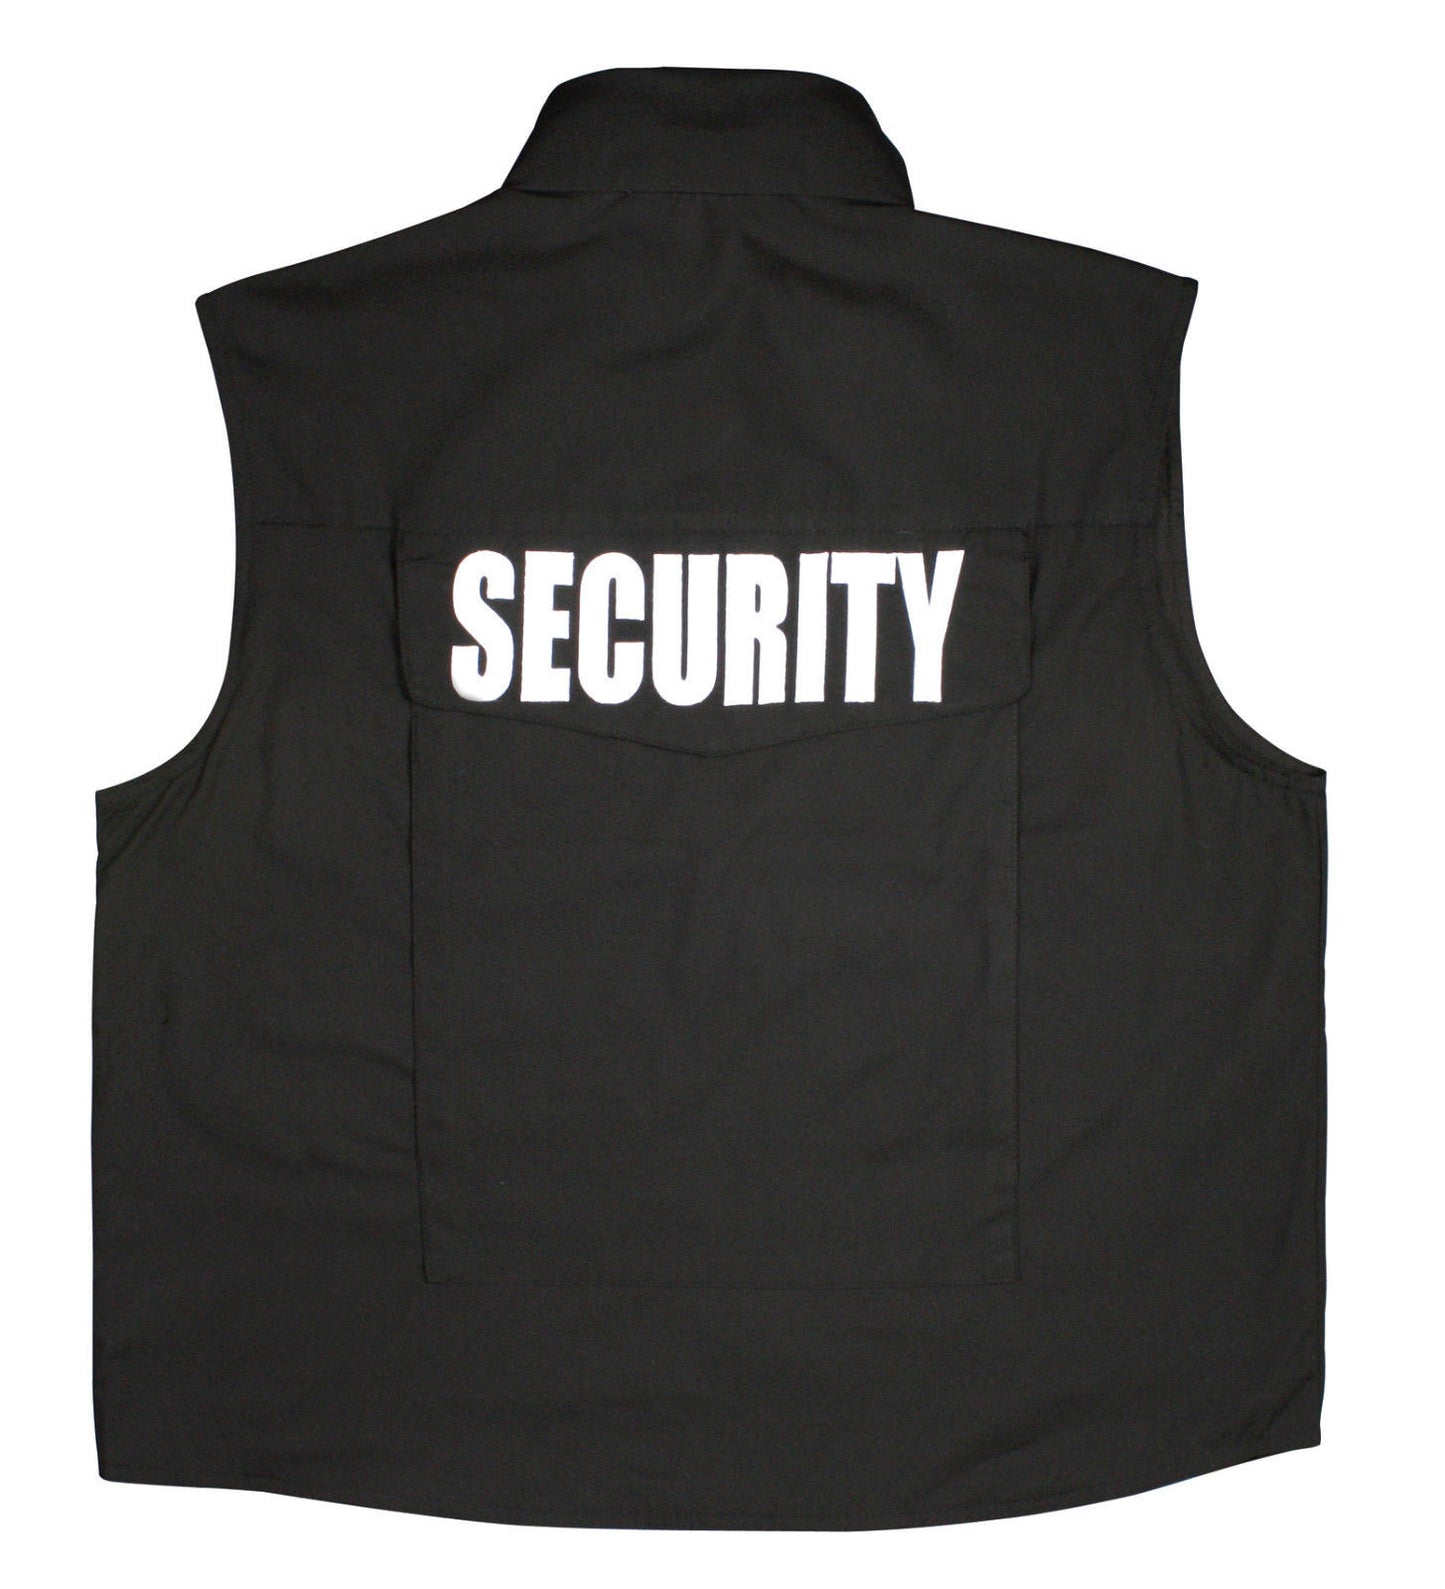 Black SECURITY Ranger Vest Cotton Bouncer Security Guard Hooded Vests